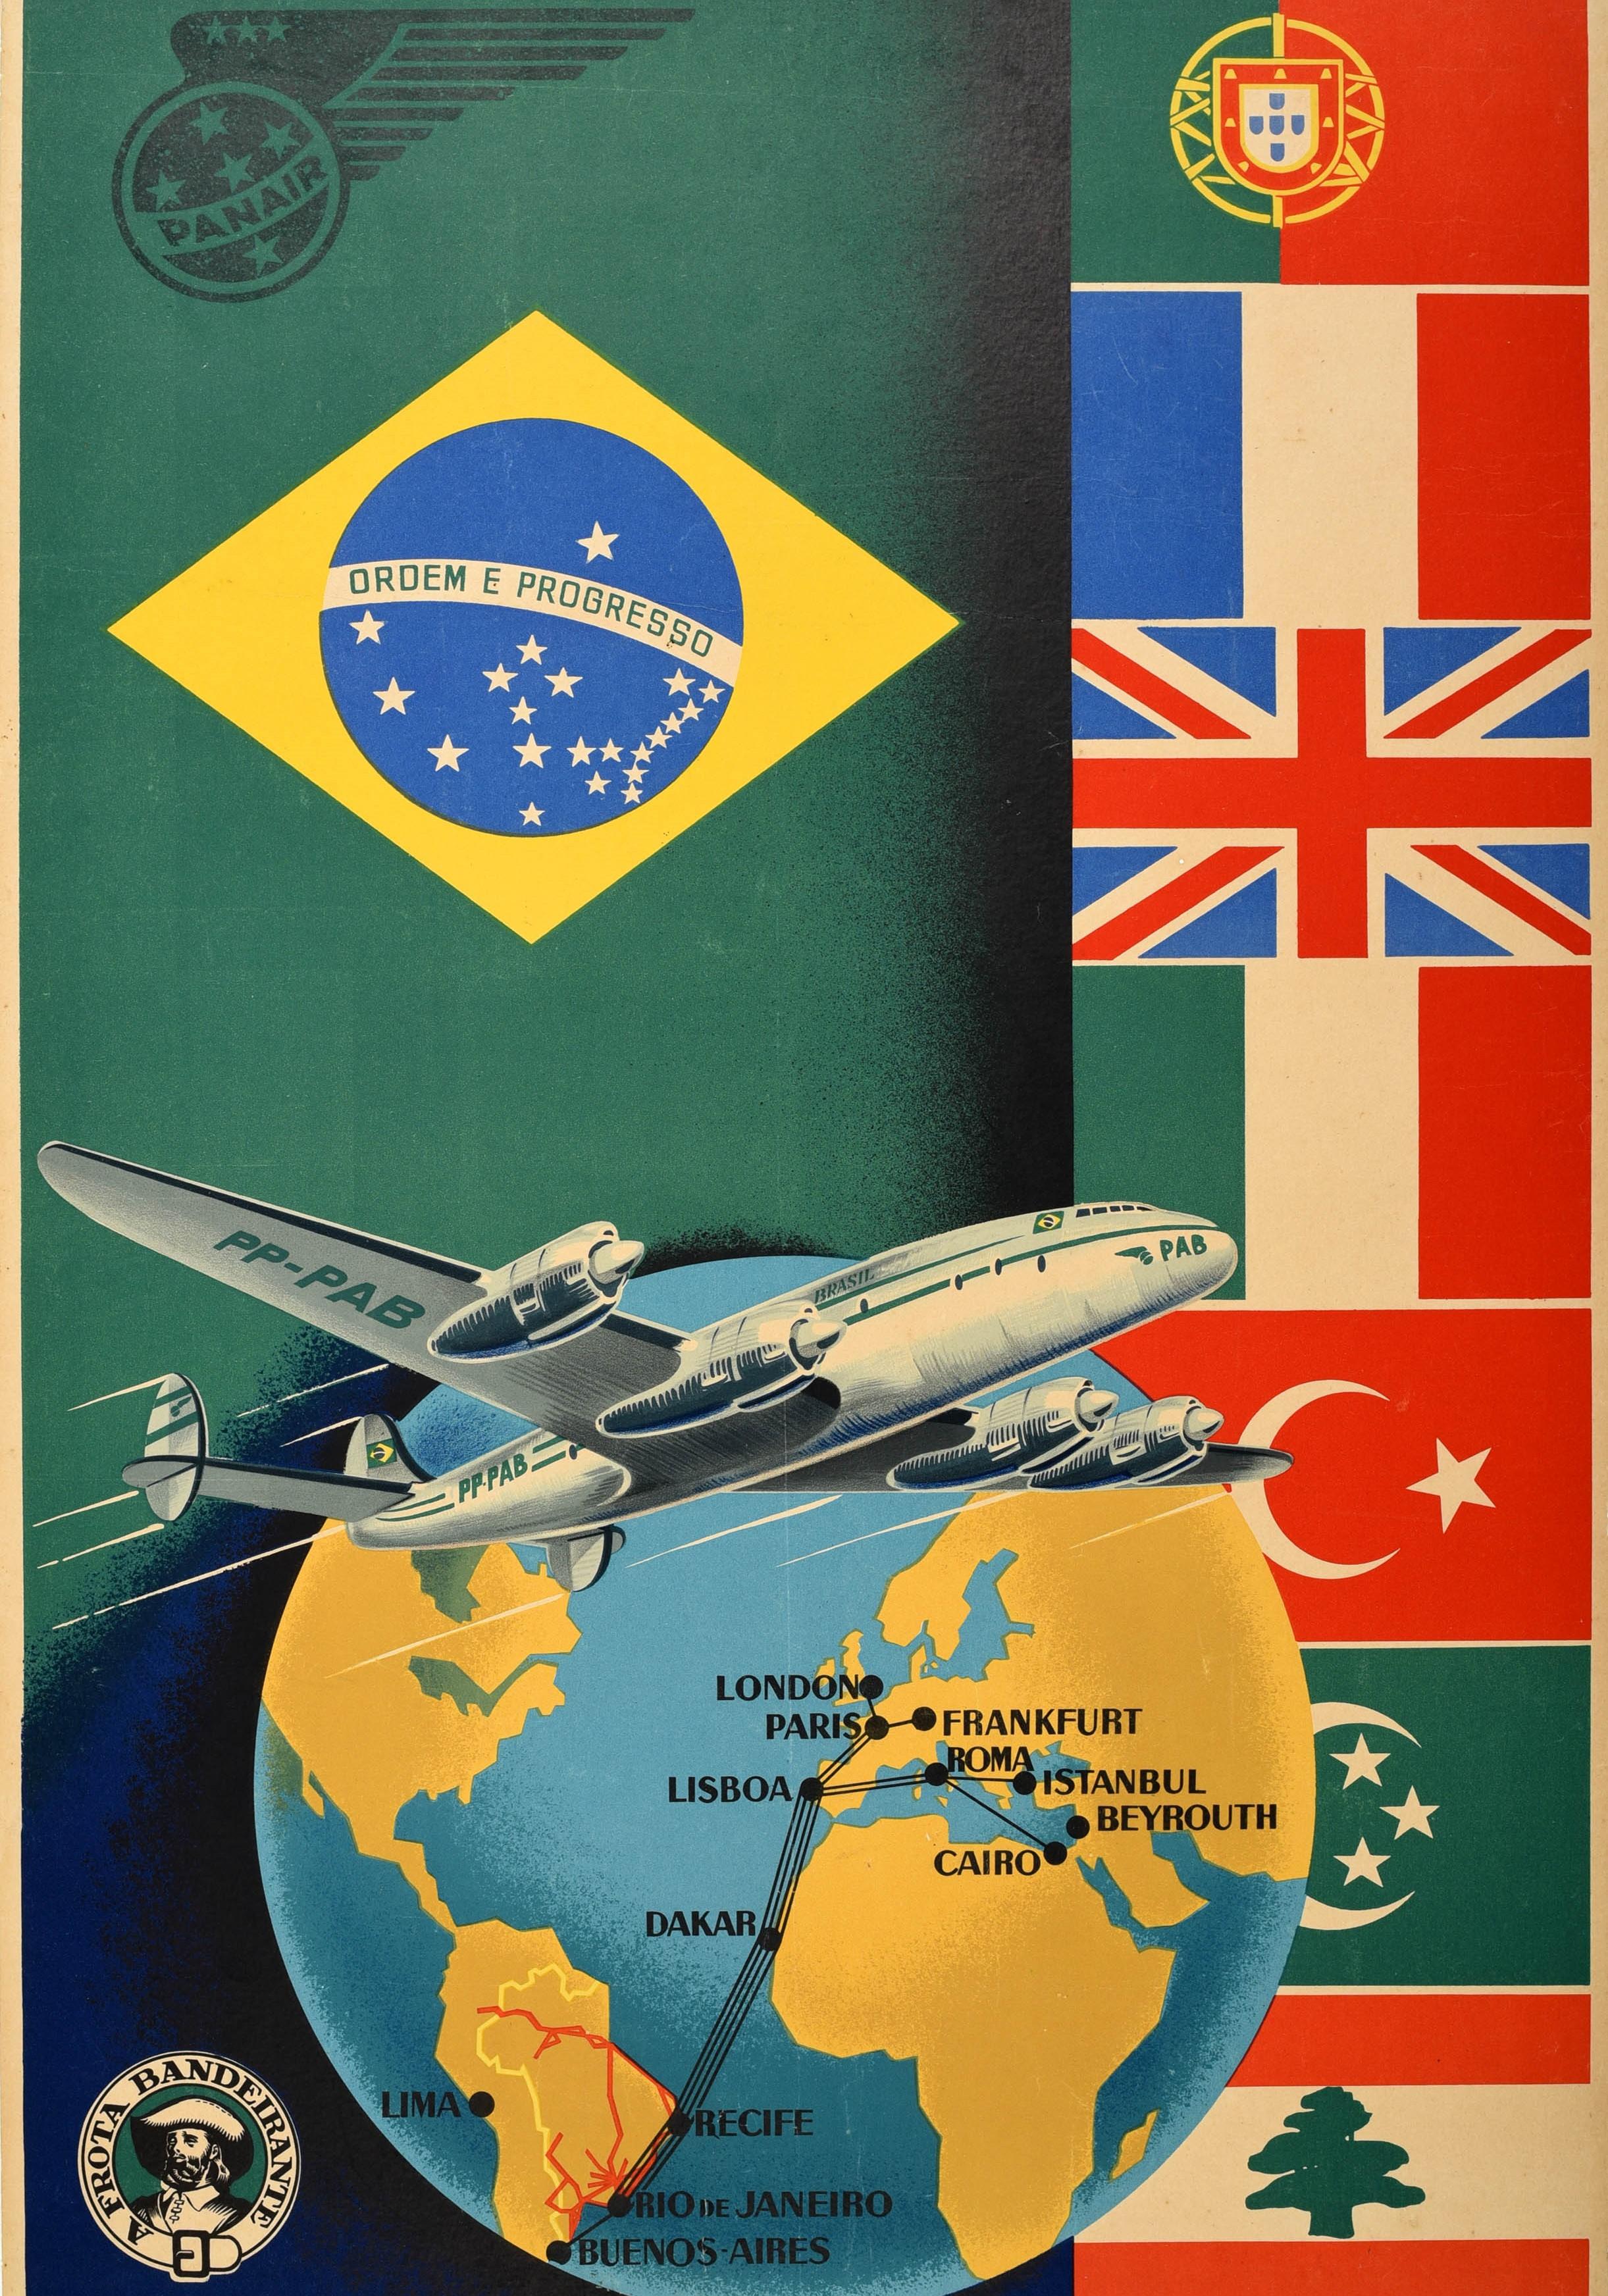 French Original Vintage Airline Travel Poster Panair Do Brasil Lockheed Constellation